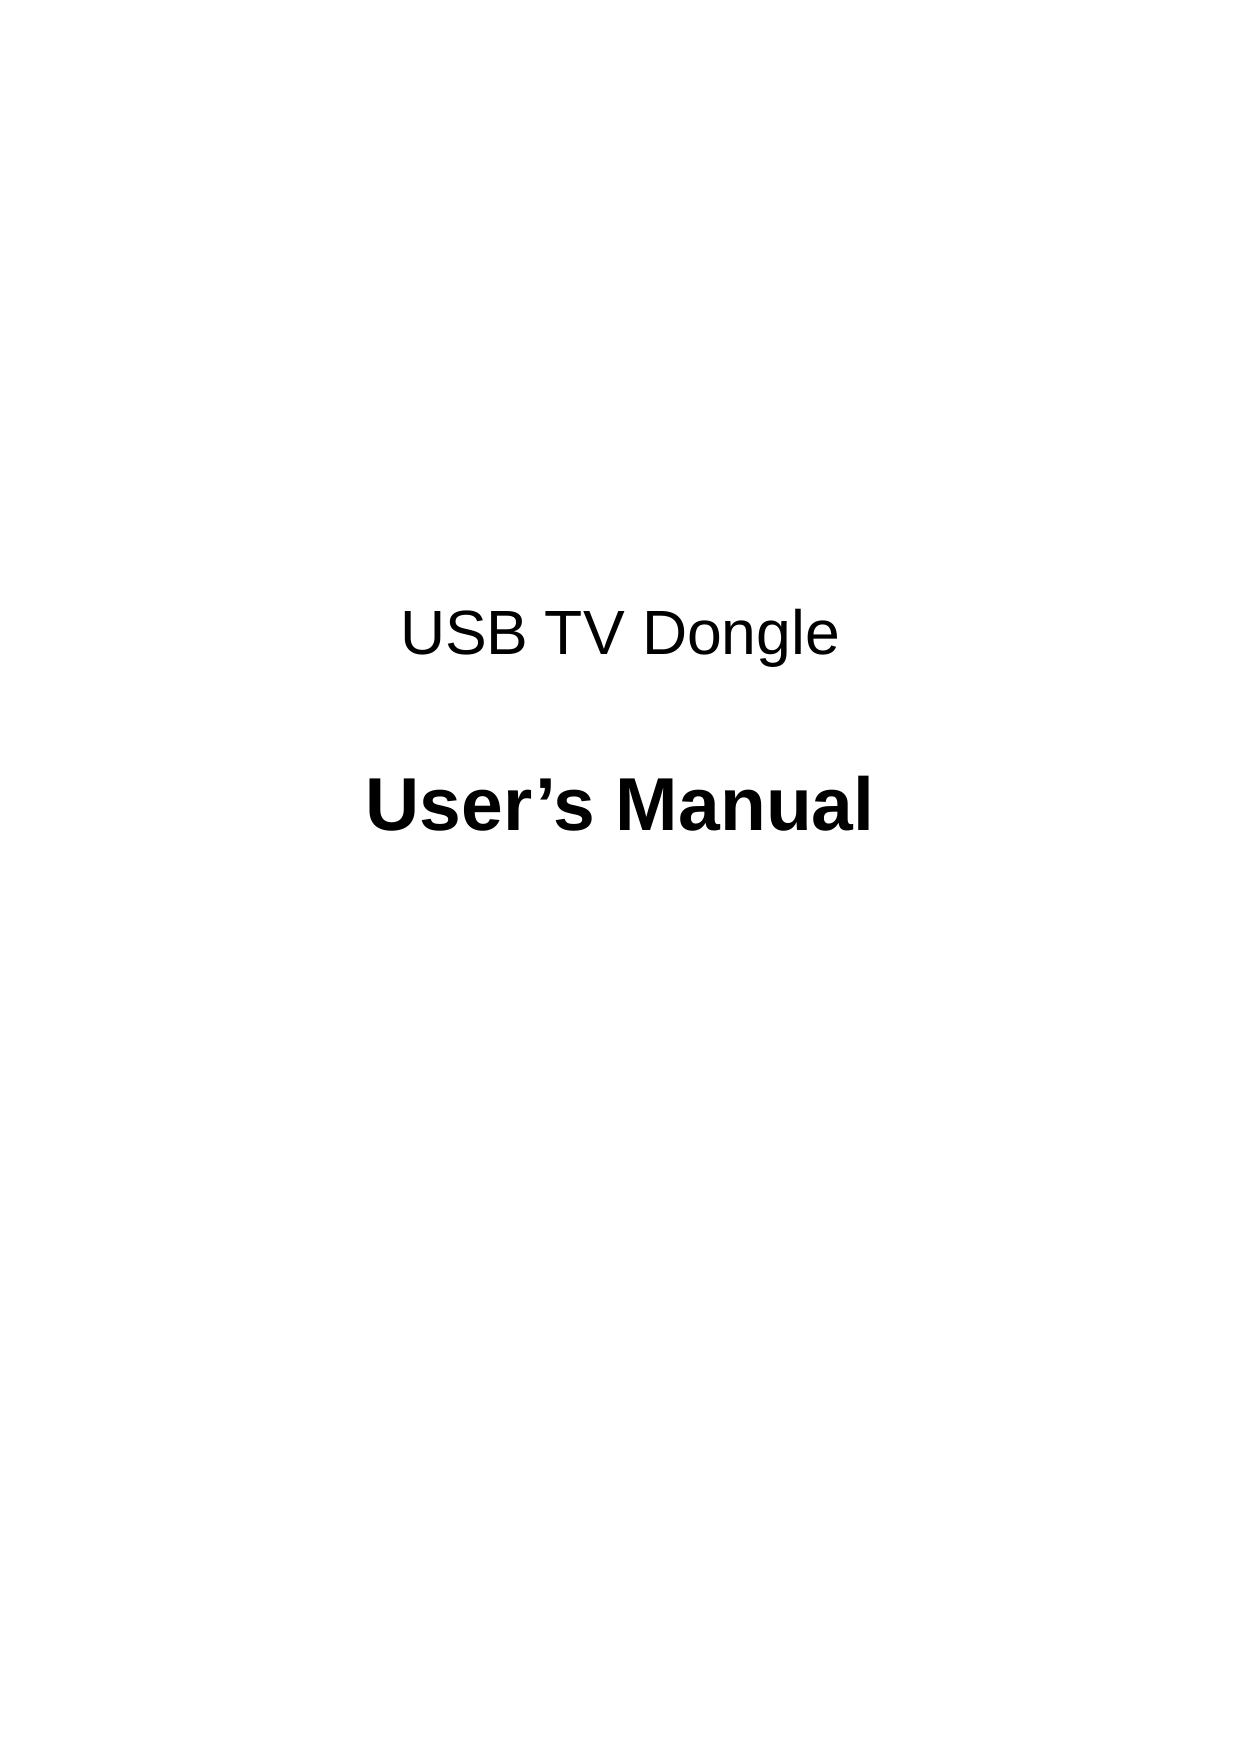        USB TV Dongle  User’s Manual       